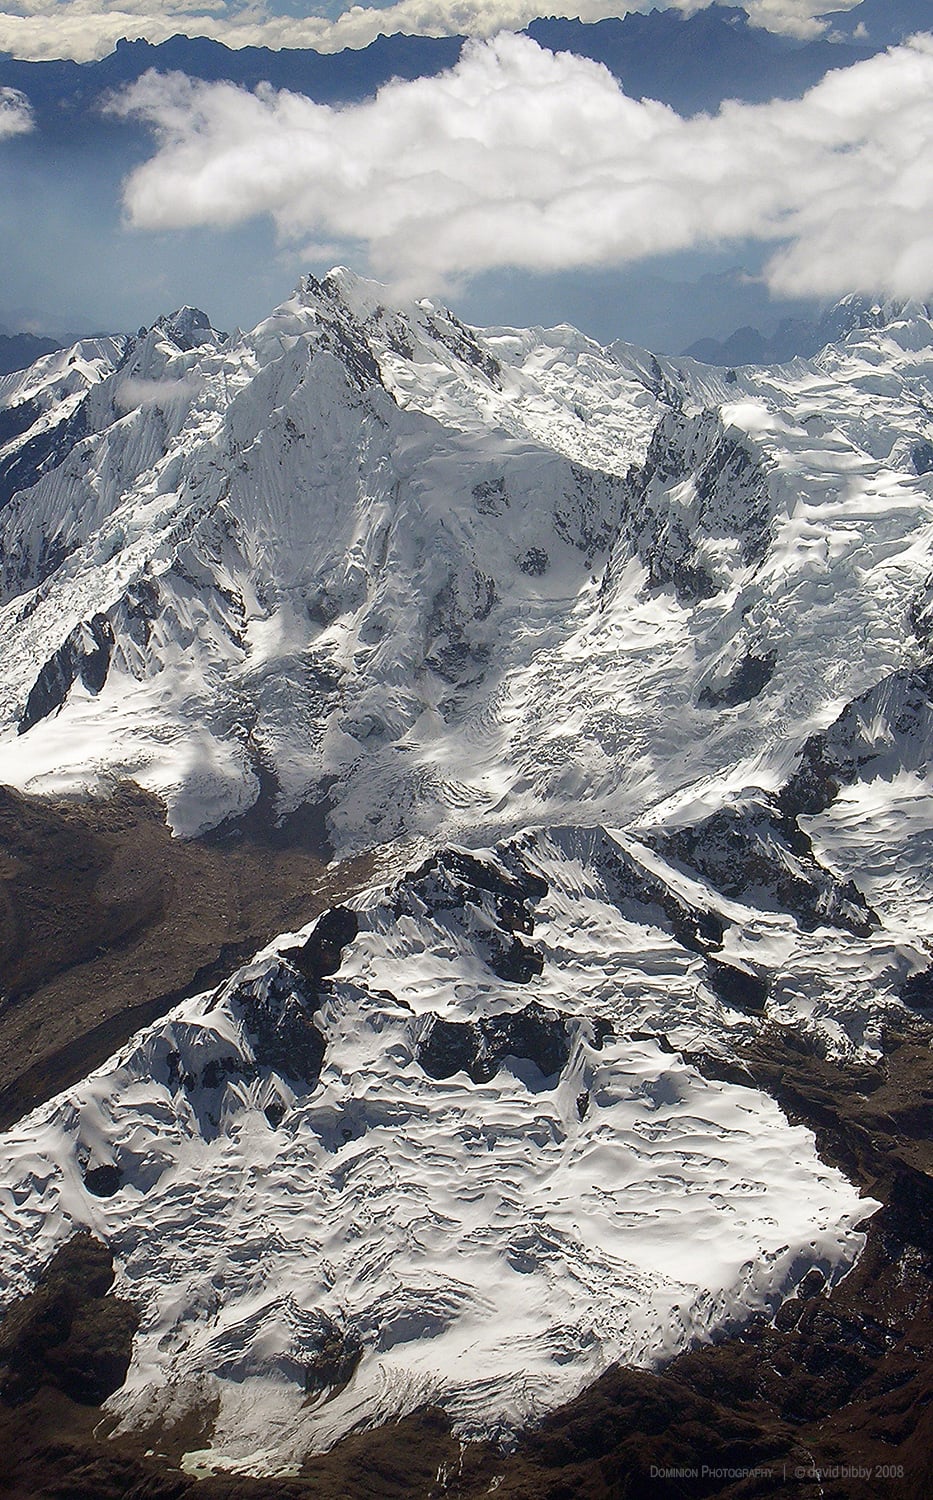  Cordillera Vilcanota, Peru. 